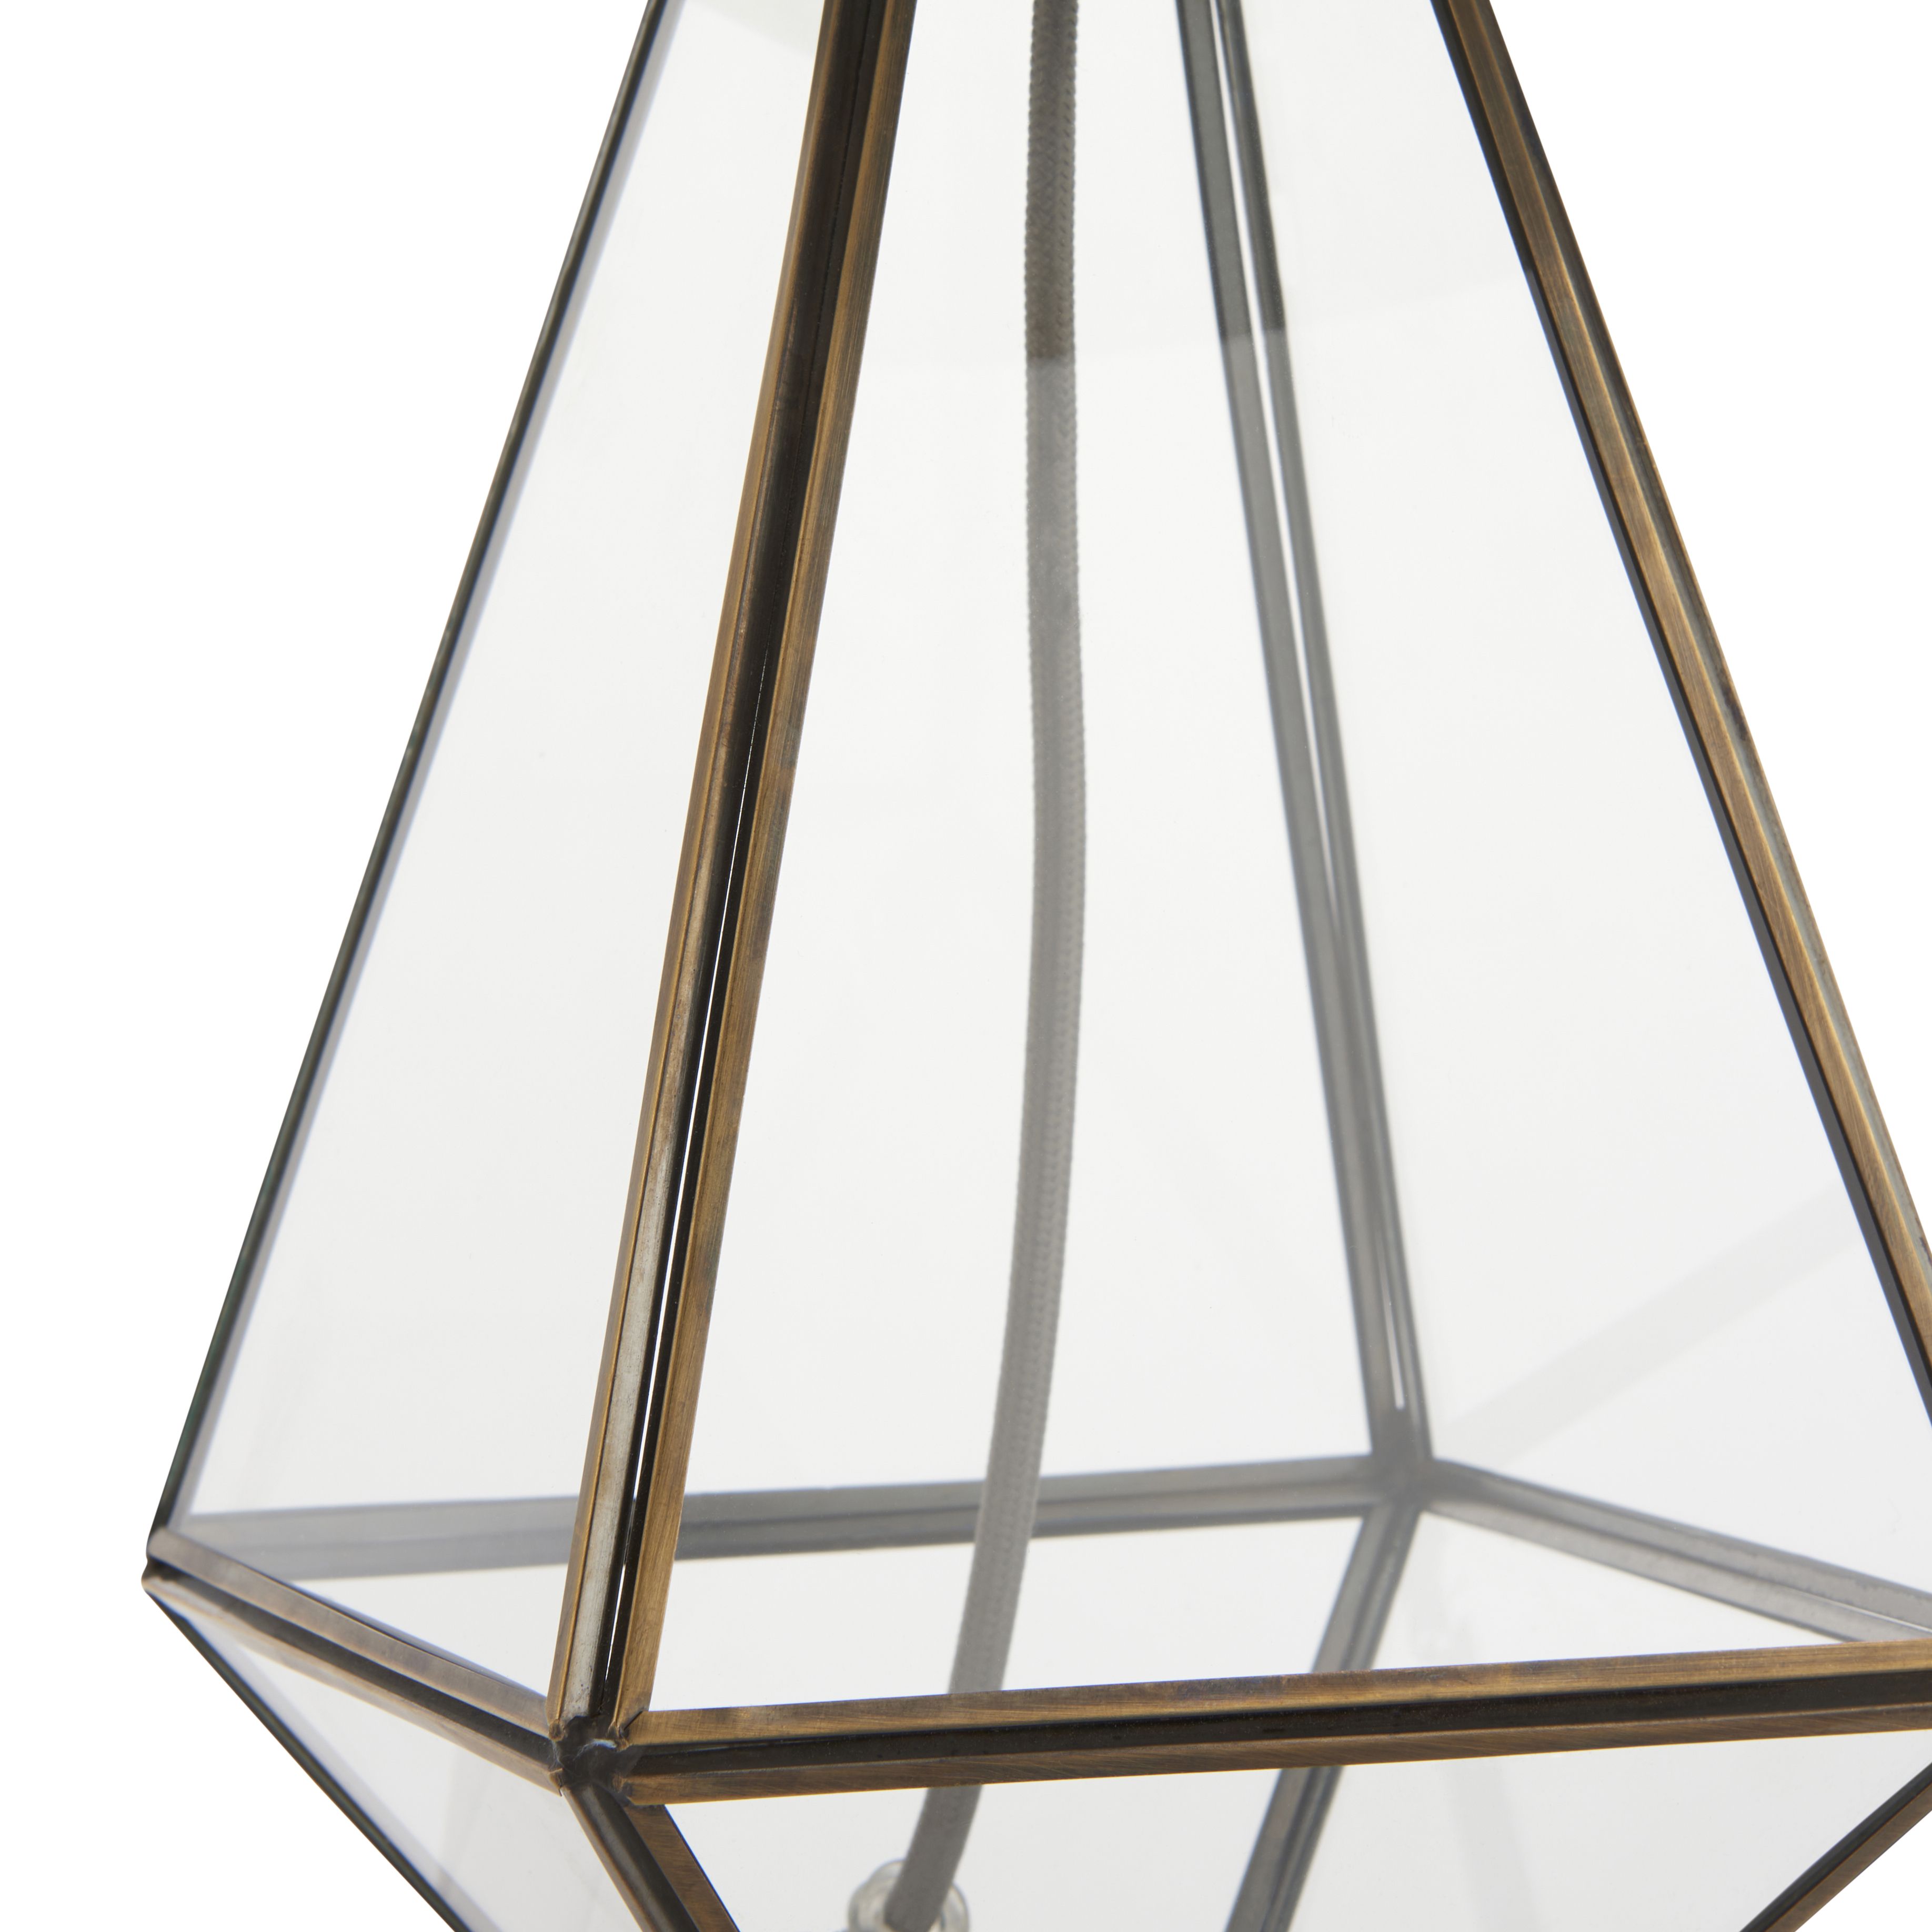 Amsterdam glass Table lamp